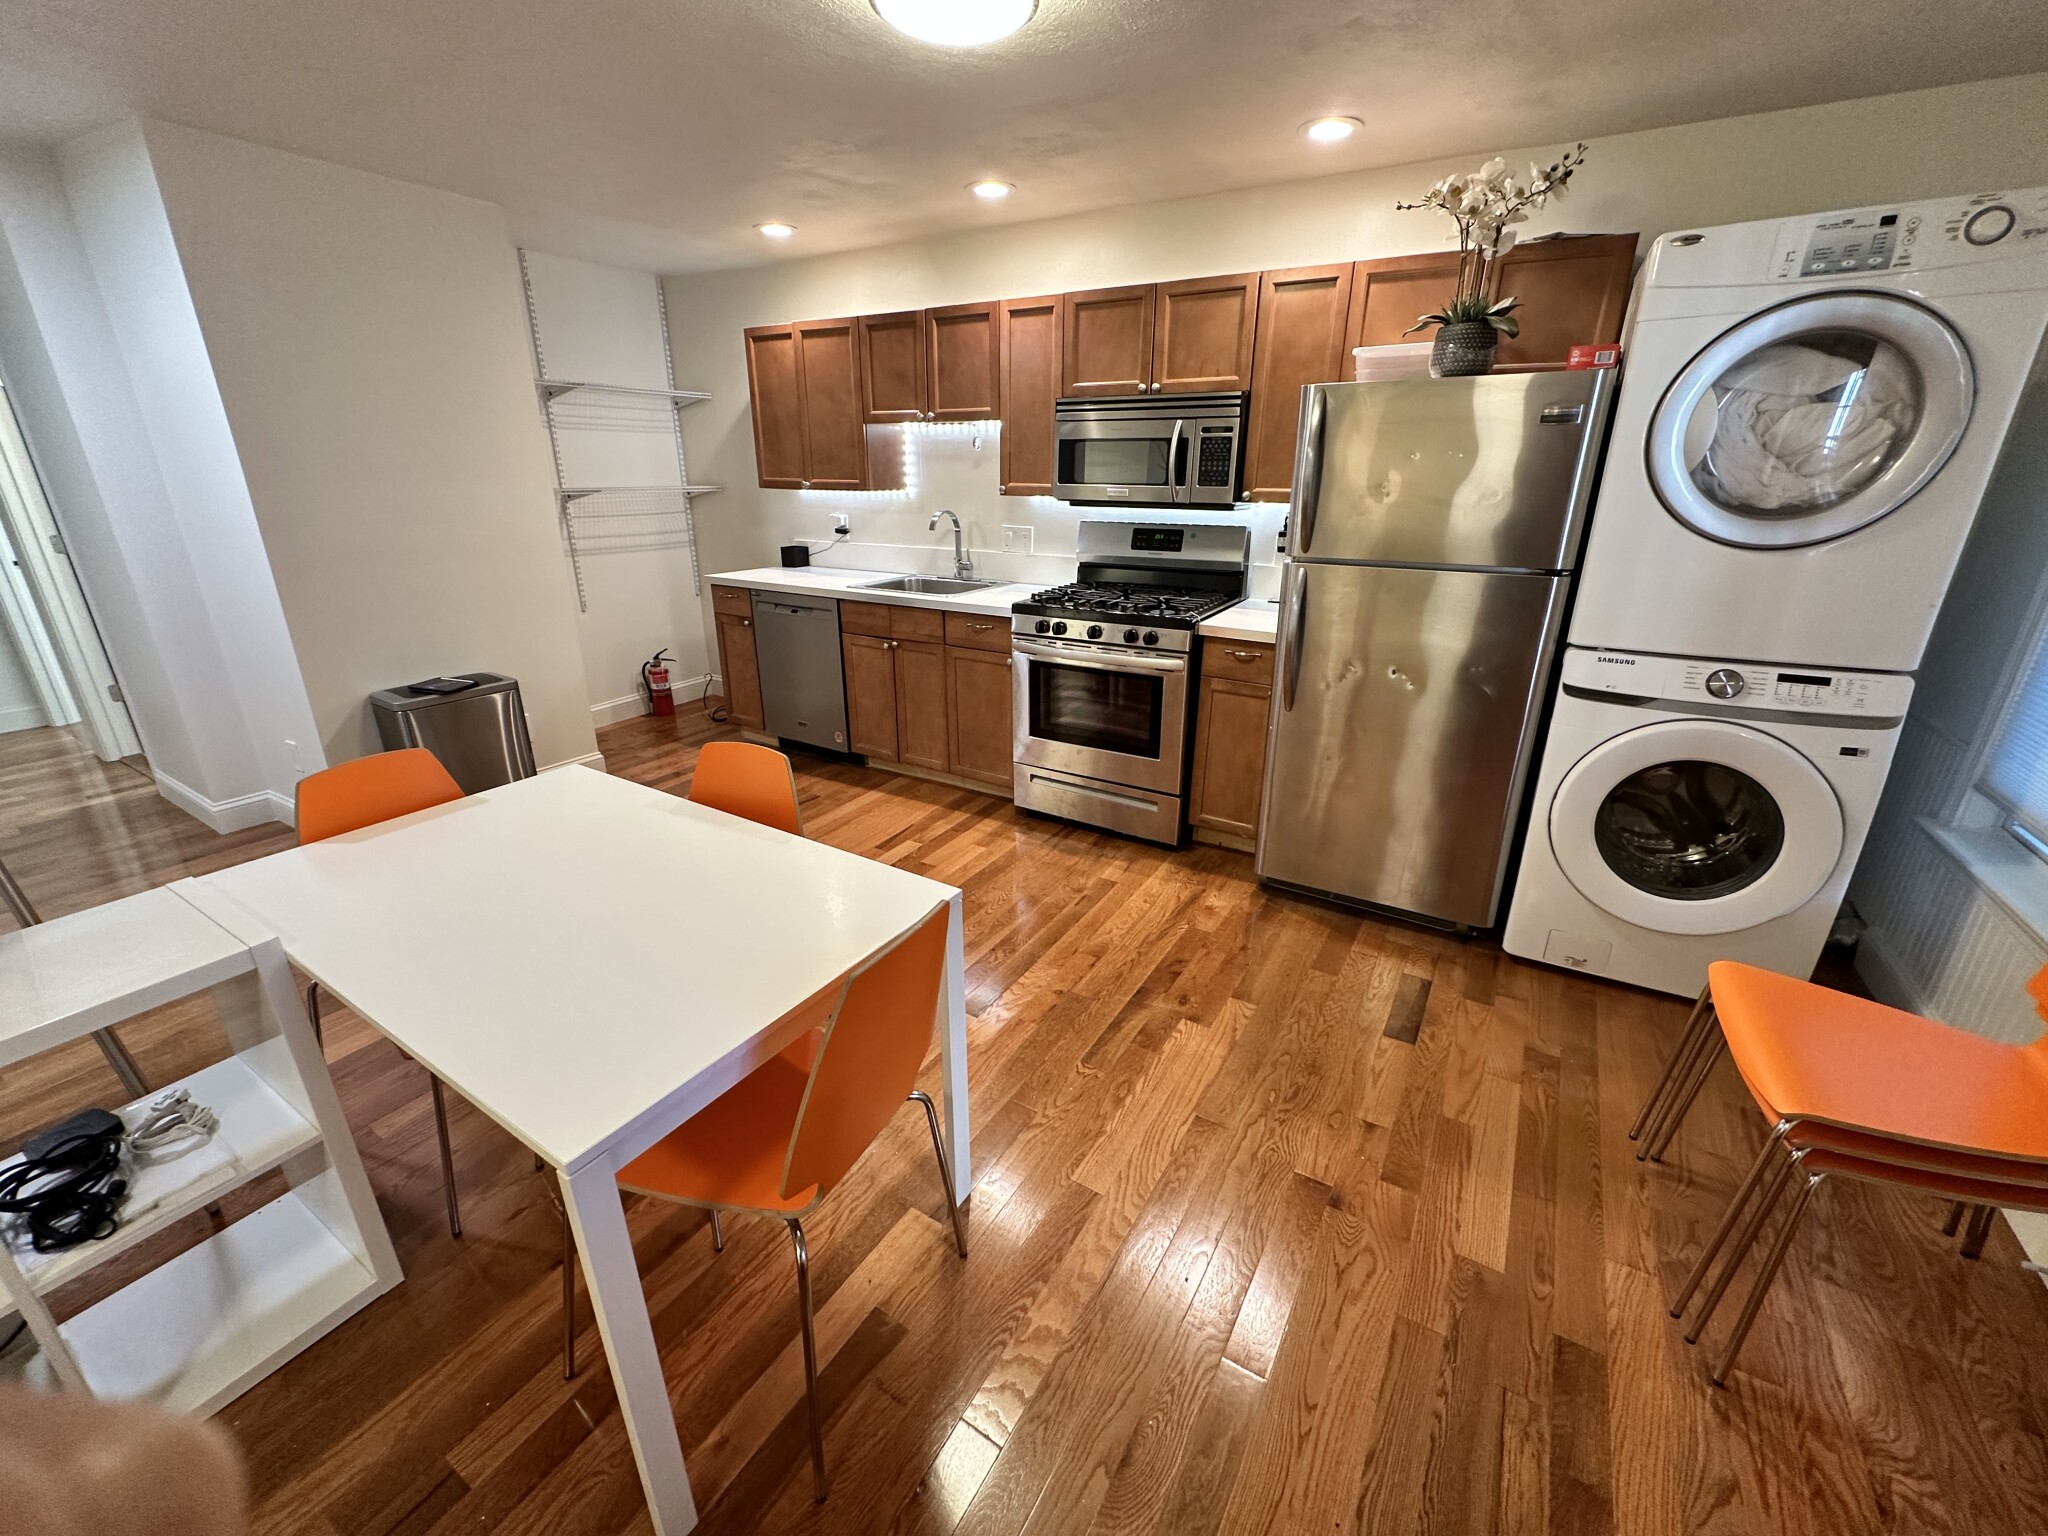 Photos of apartment on Kemp,Boston MA 02127